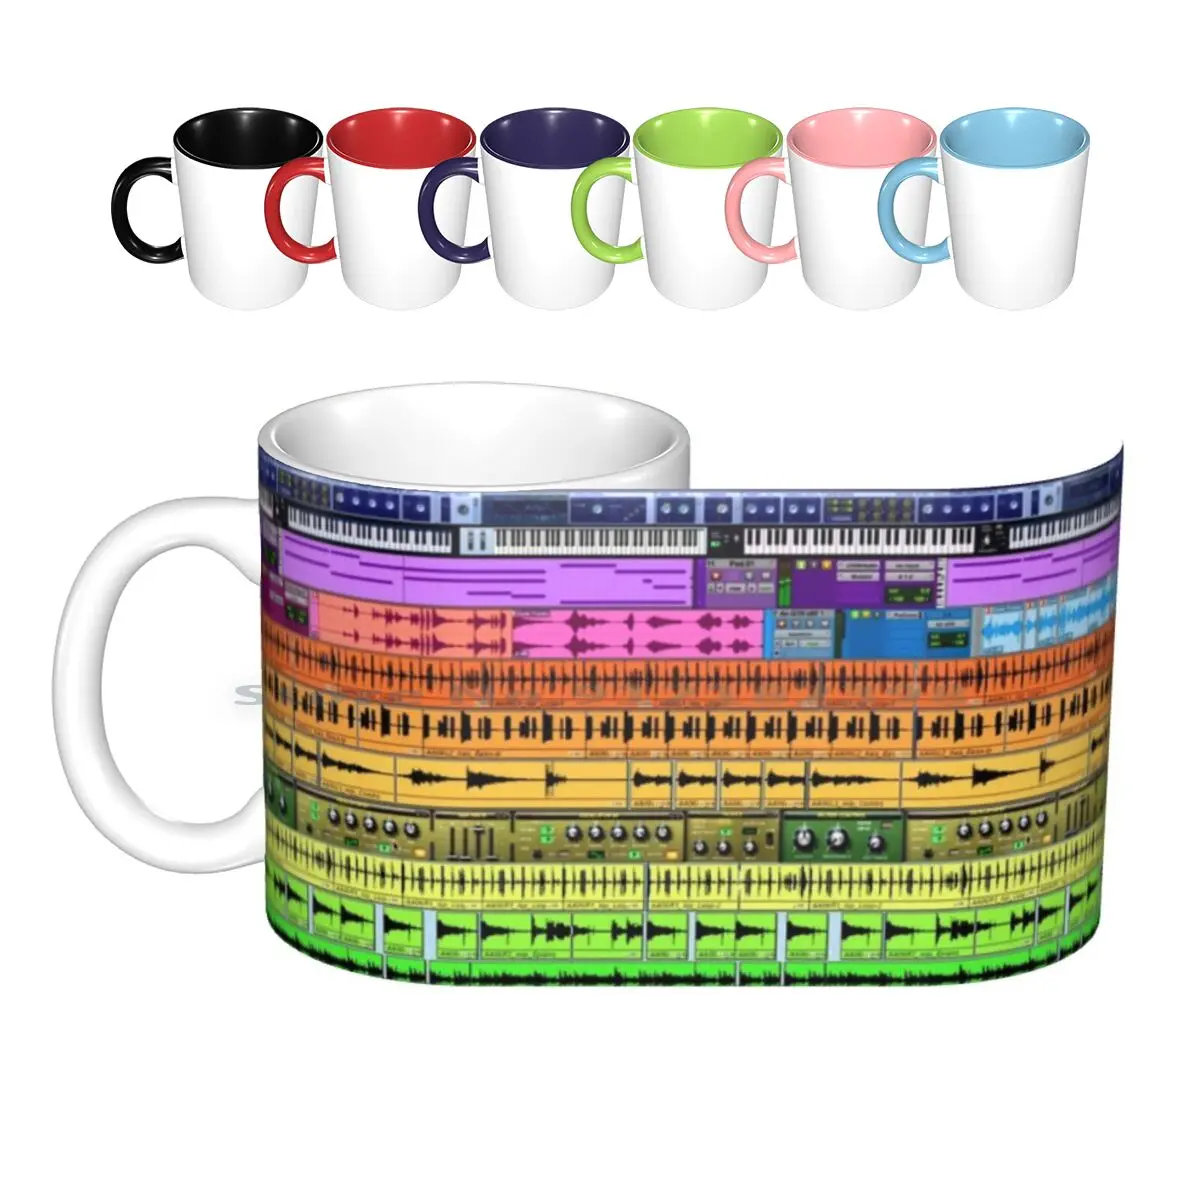 Tazas de cerámica de elección del productor, tazas de café, té con leche, Daw, productor de música, sonido Vst Protools Ableton Logic Pro, motivo de Cubase